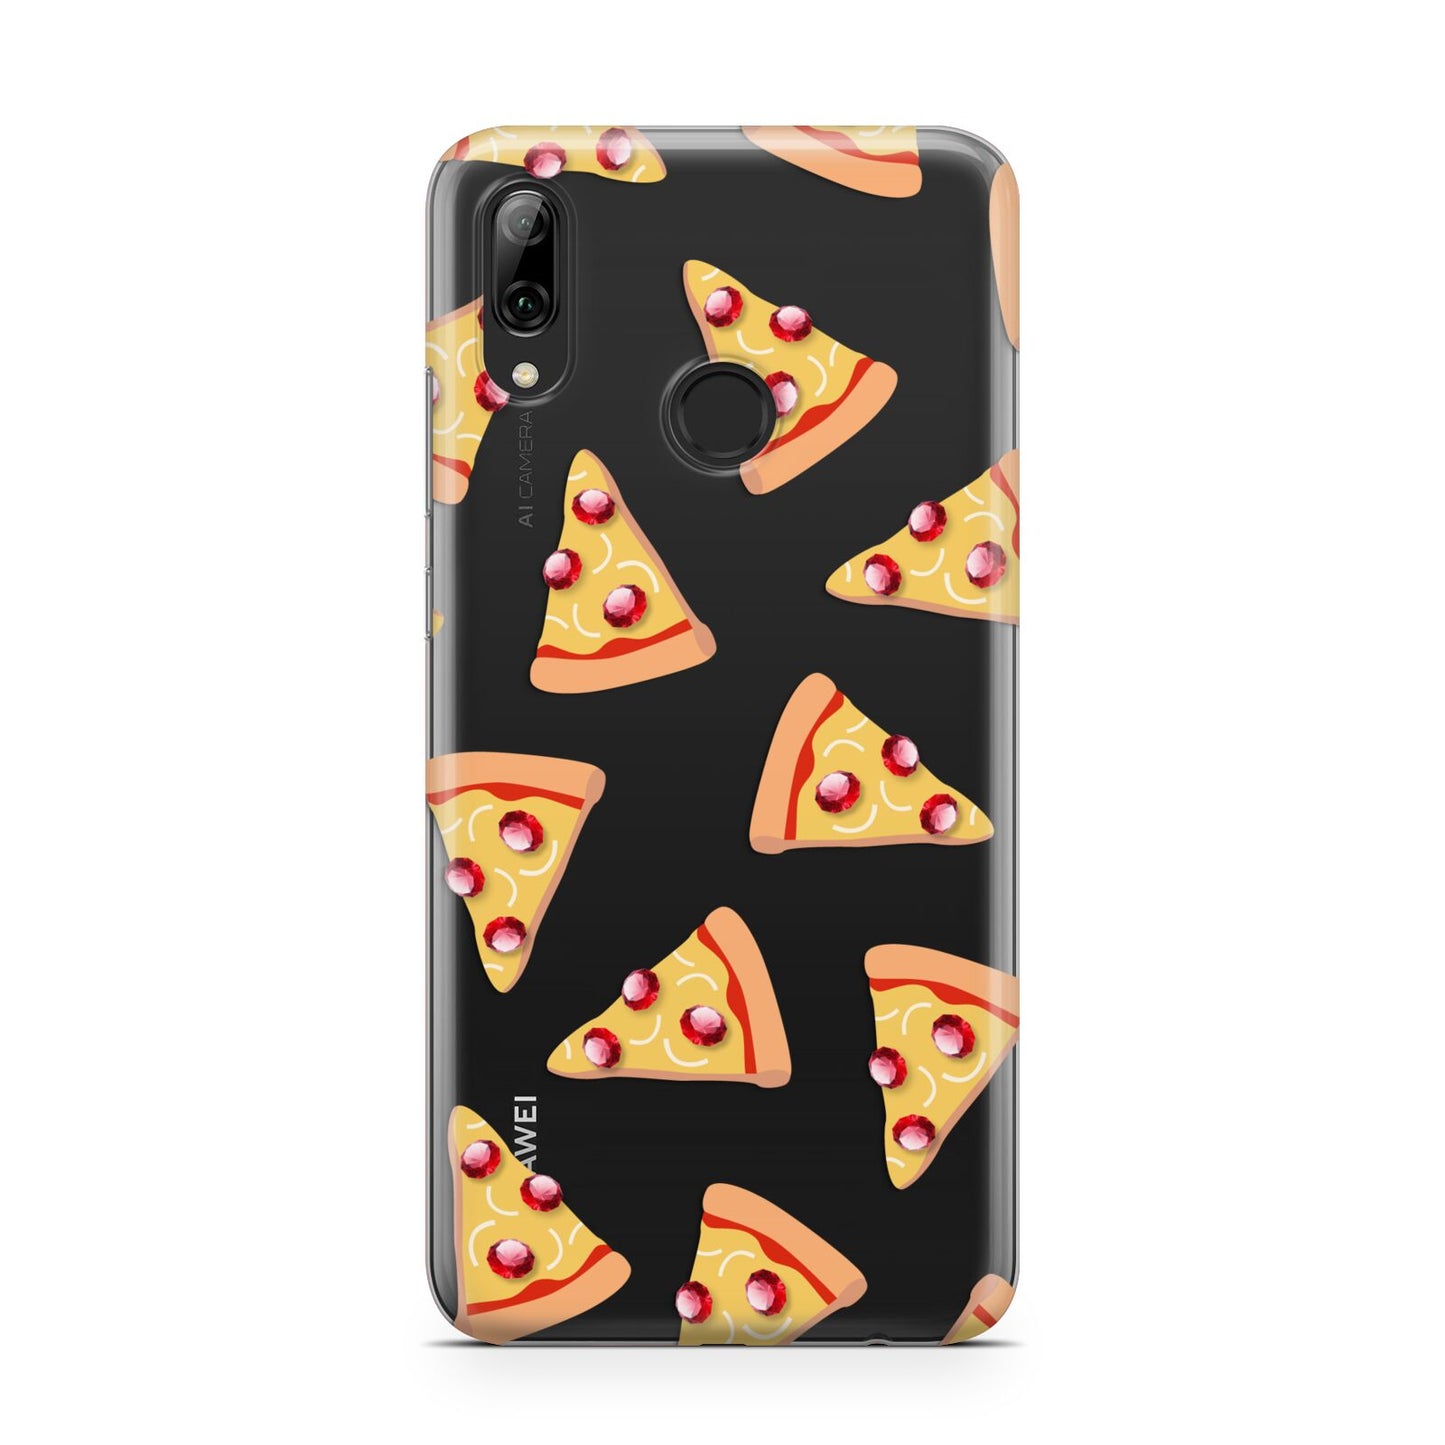 Rubies on Cartoon Pizza Slices Huawei Y7 2019